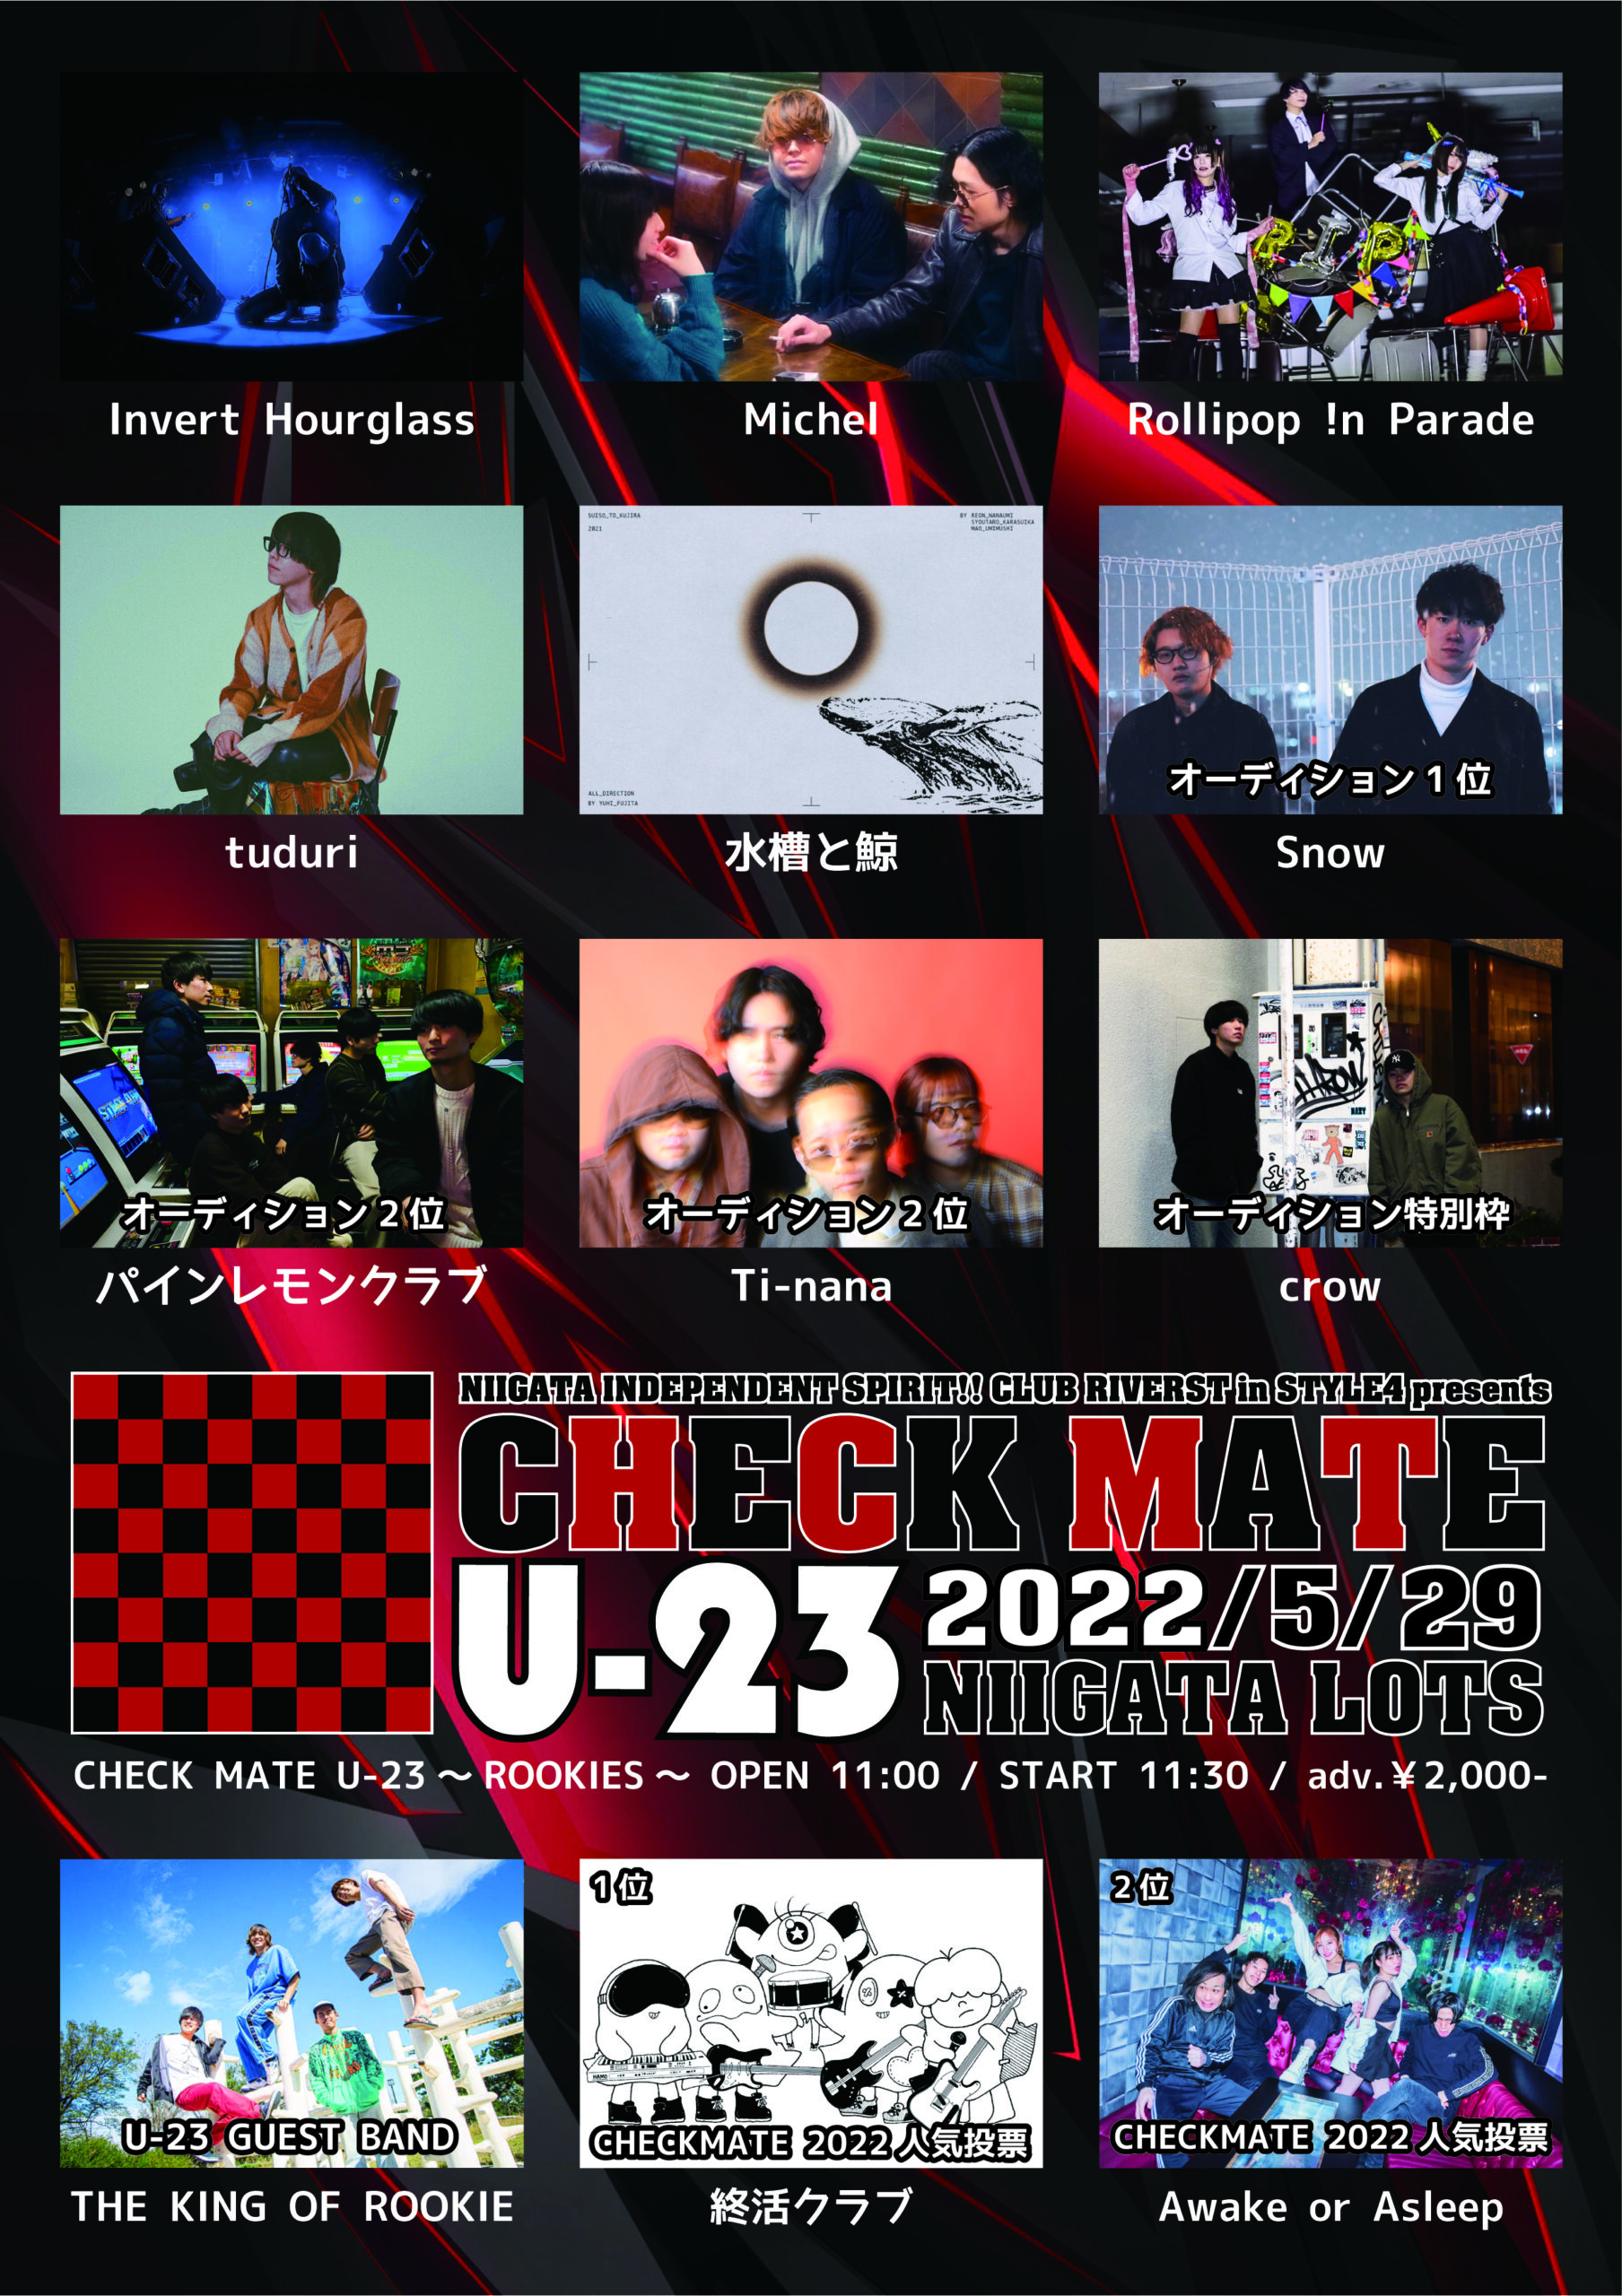 CHECK MATE 2022 U-23 〜ROOKIES〜